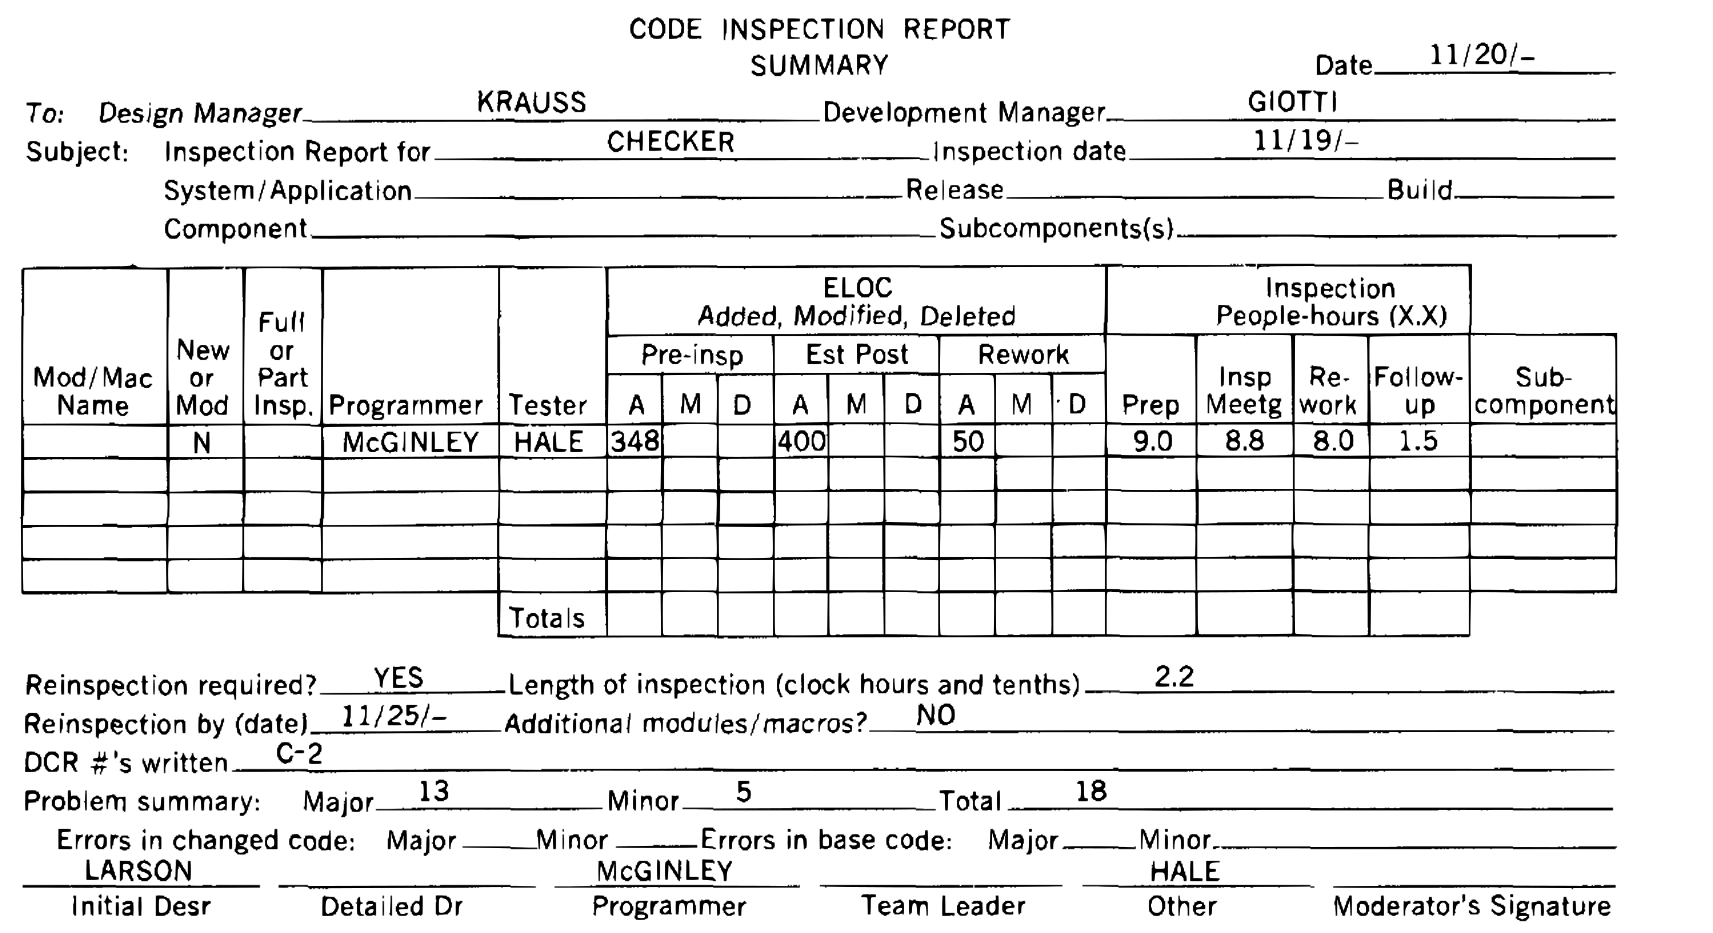 Code Inspection Report